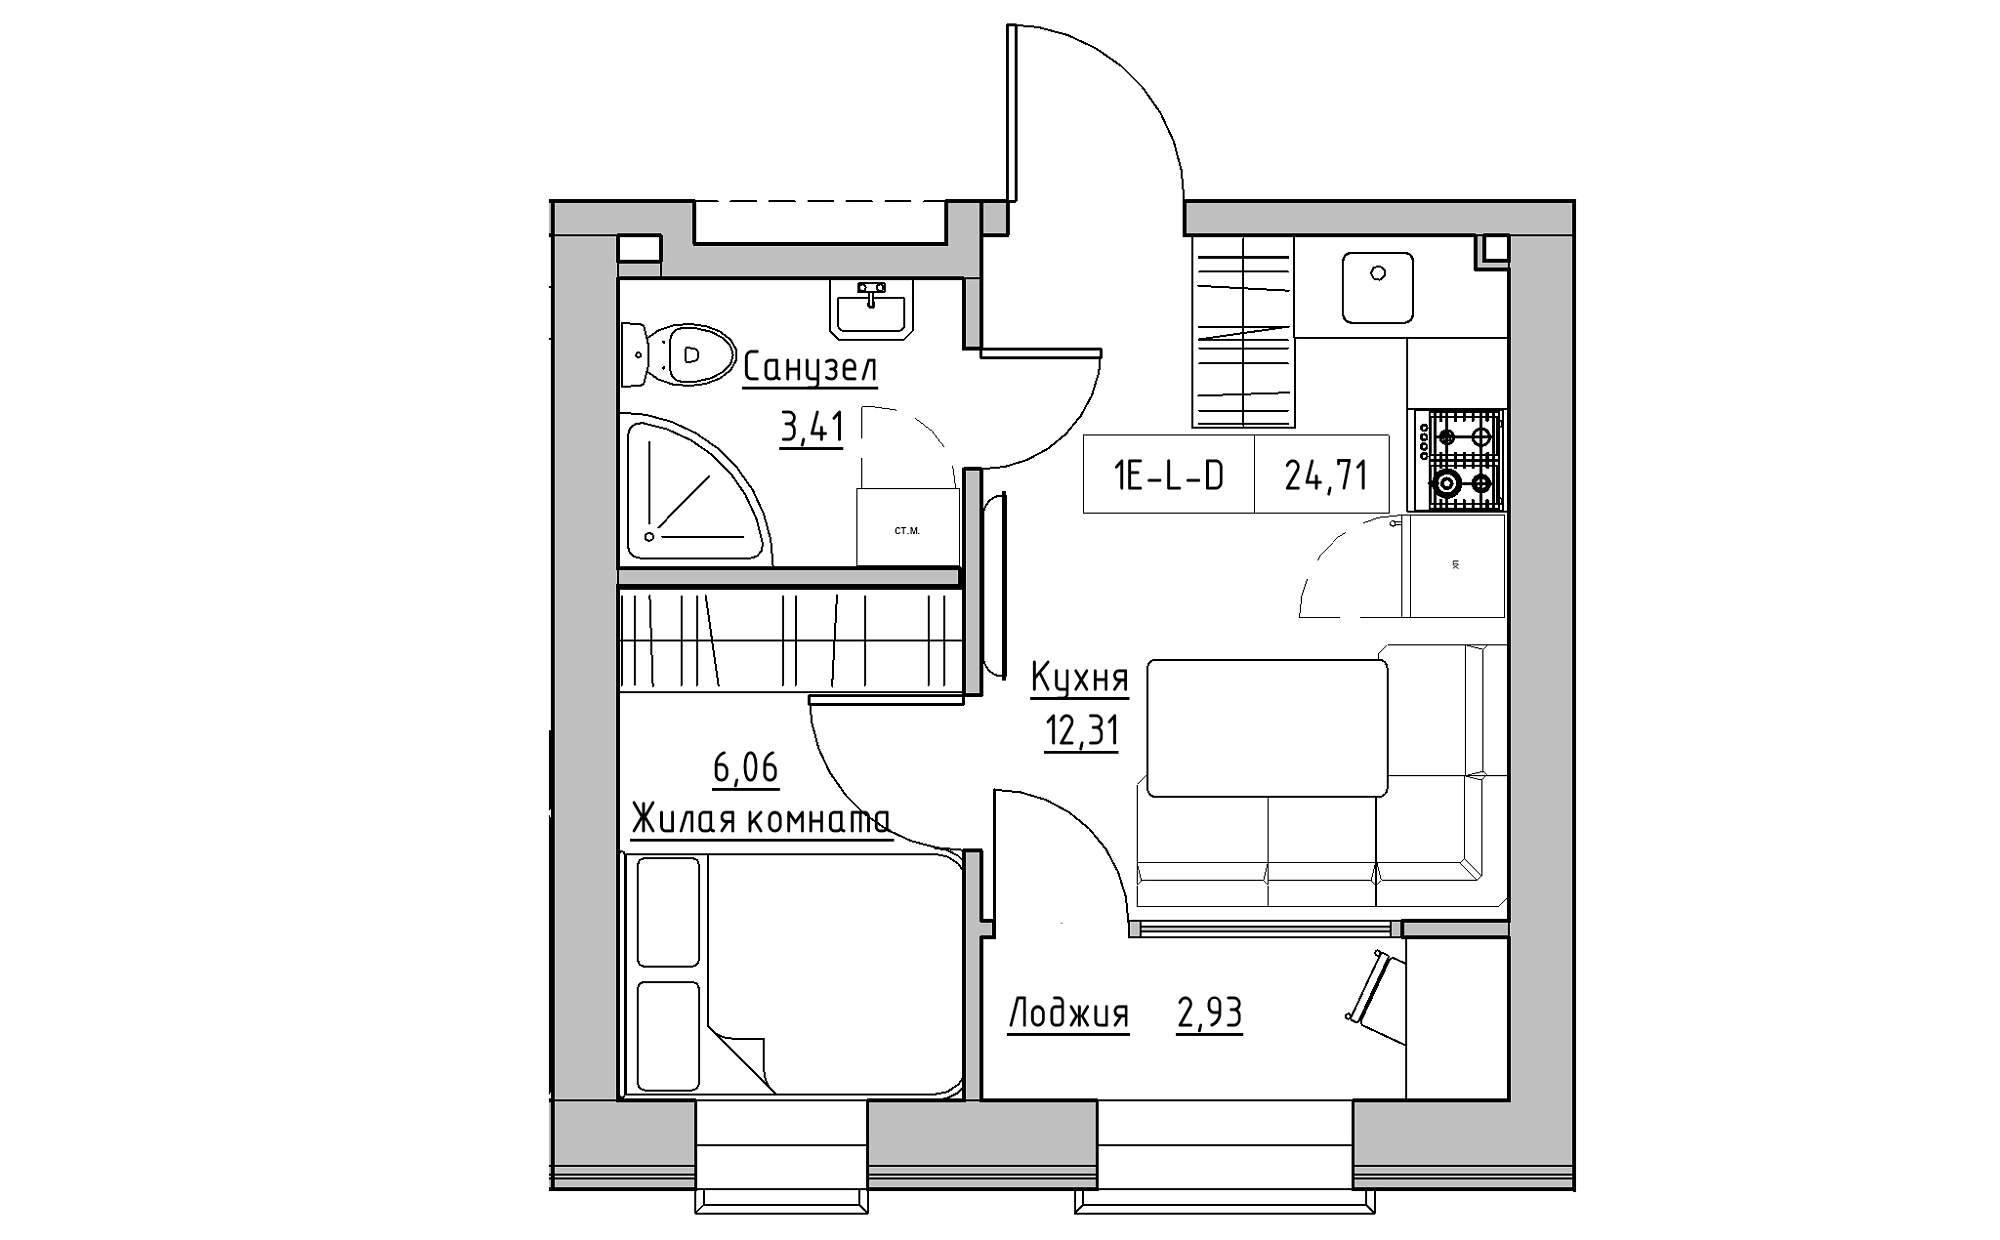 Planning 1-rm flats area 24.71m2, KS-022-01/0002.